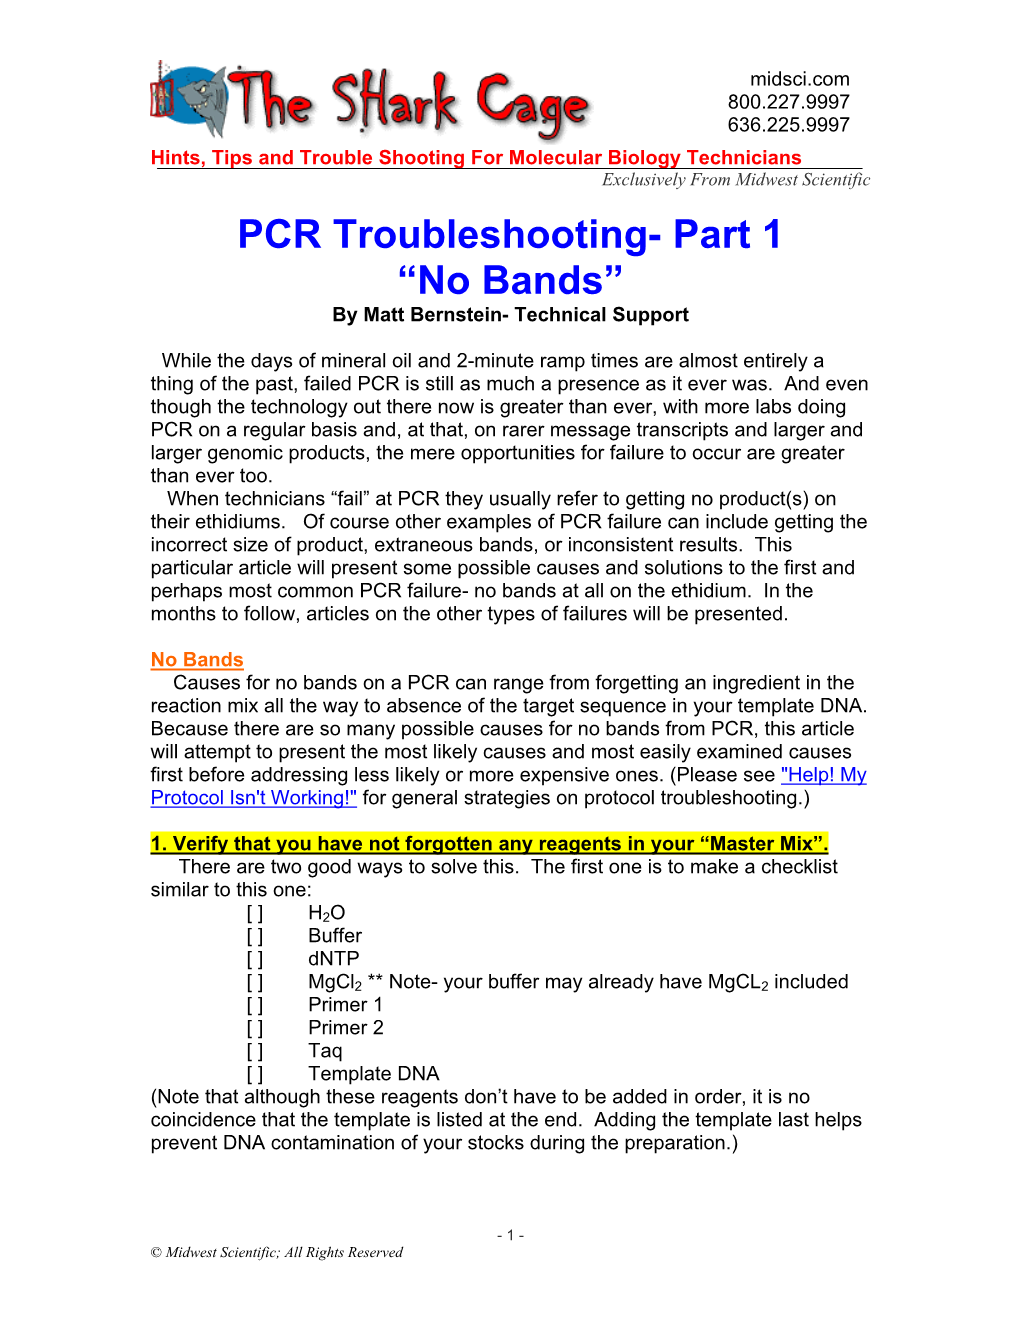 PCR Troubleshooting- Part 1 “No Bands” by Matt Bernstein- Technical Support